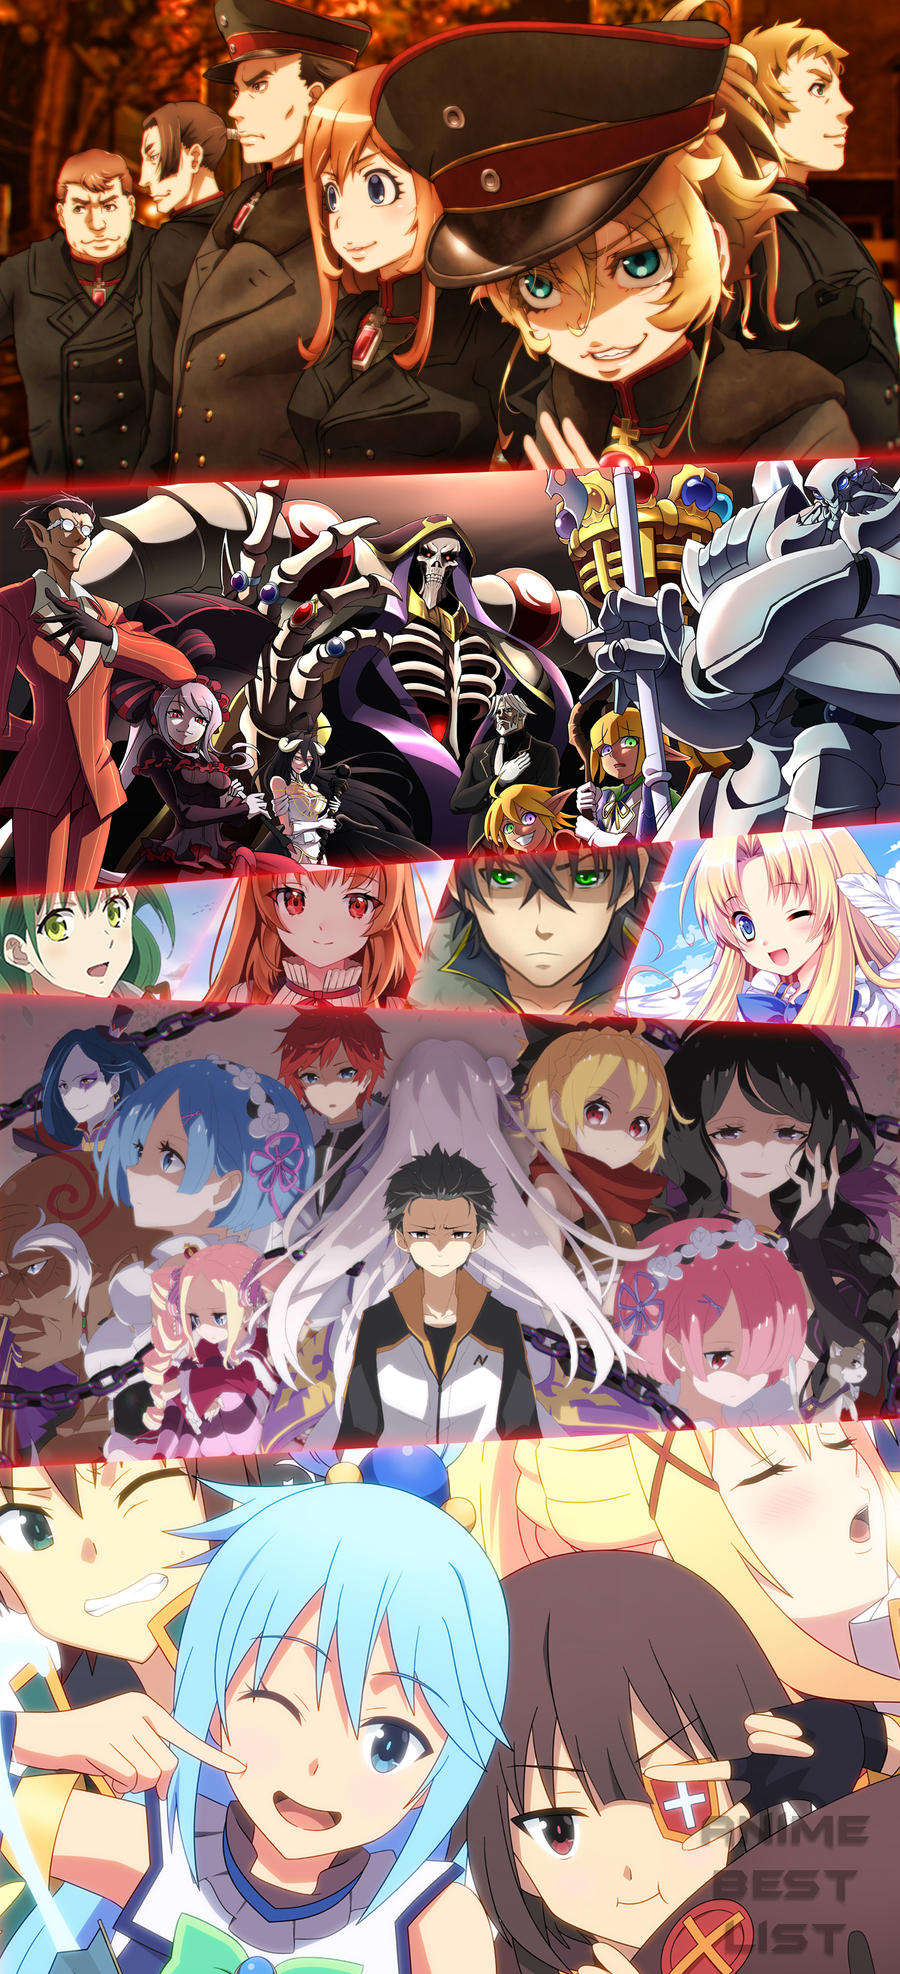 Anime Pc wallpaper by Eclipsewideedit on DeviantArt